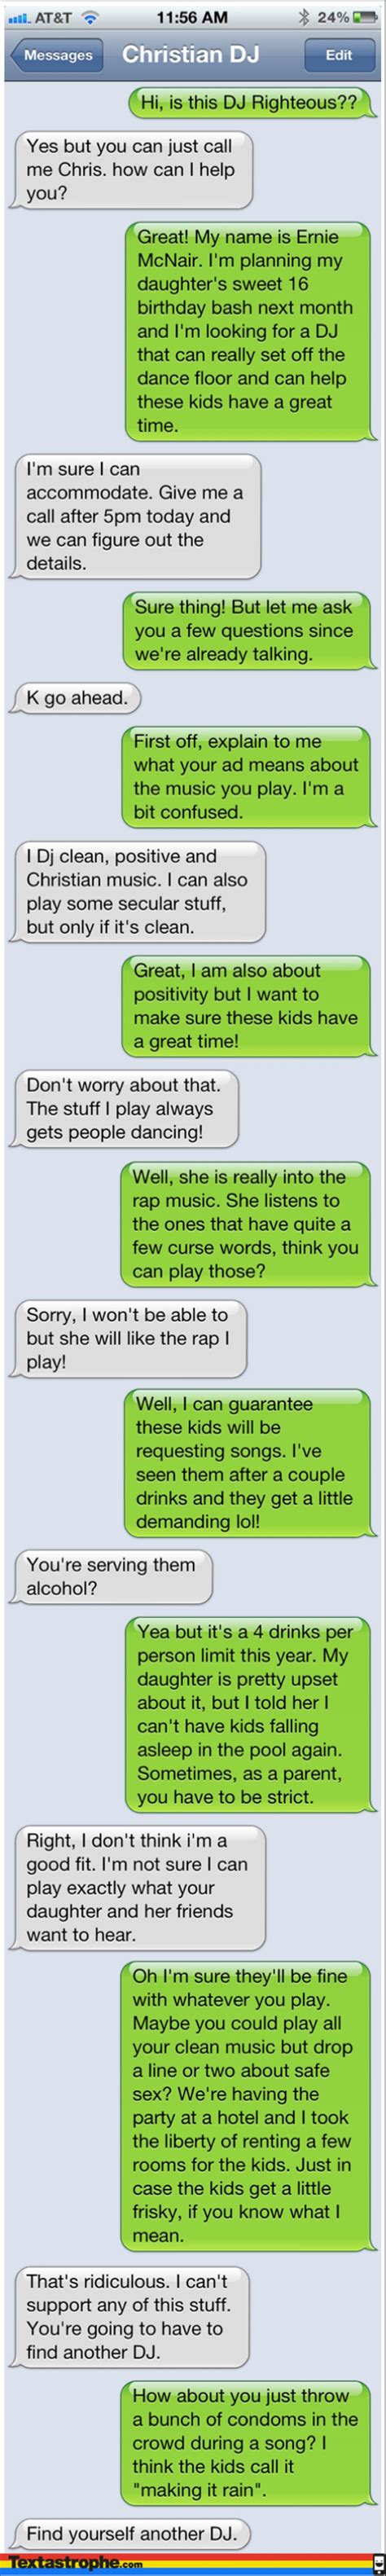 hilarious text message pranks